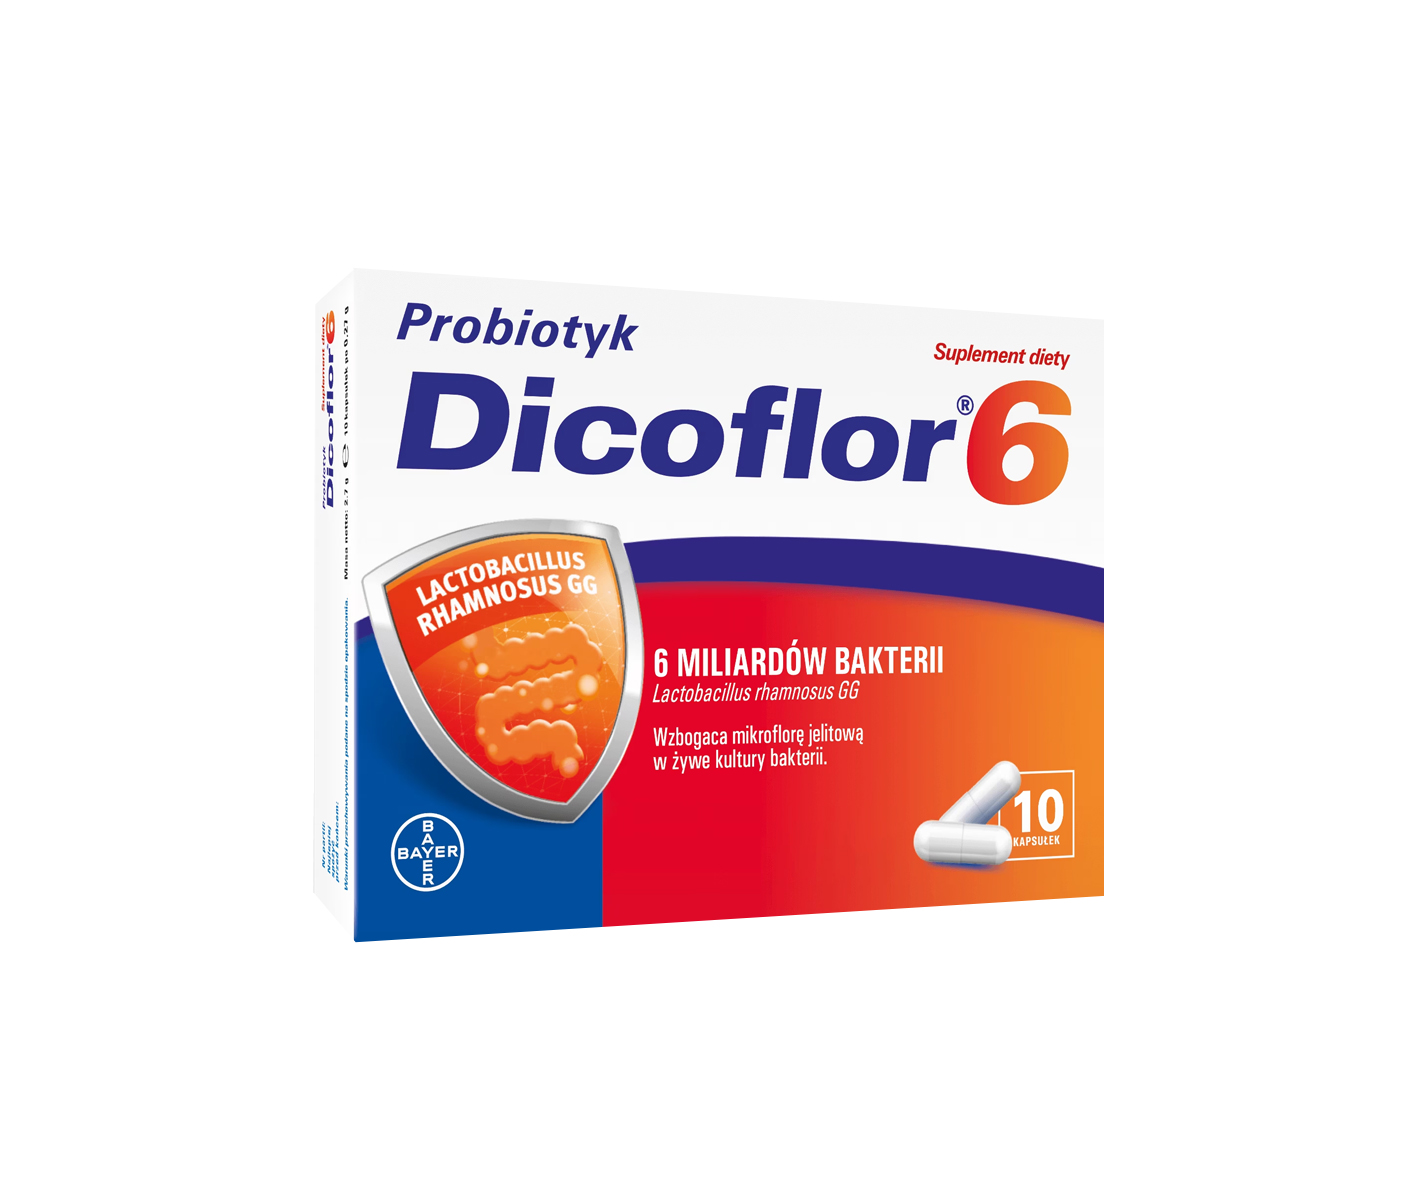 Dicoflor 6, kosttillskott, probiotika